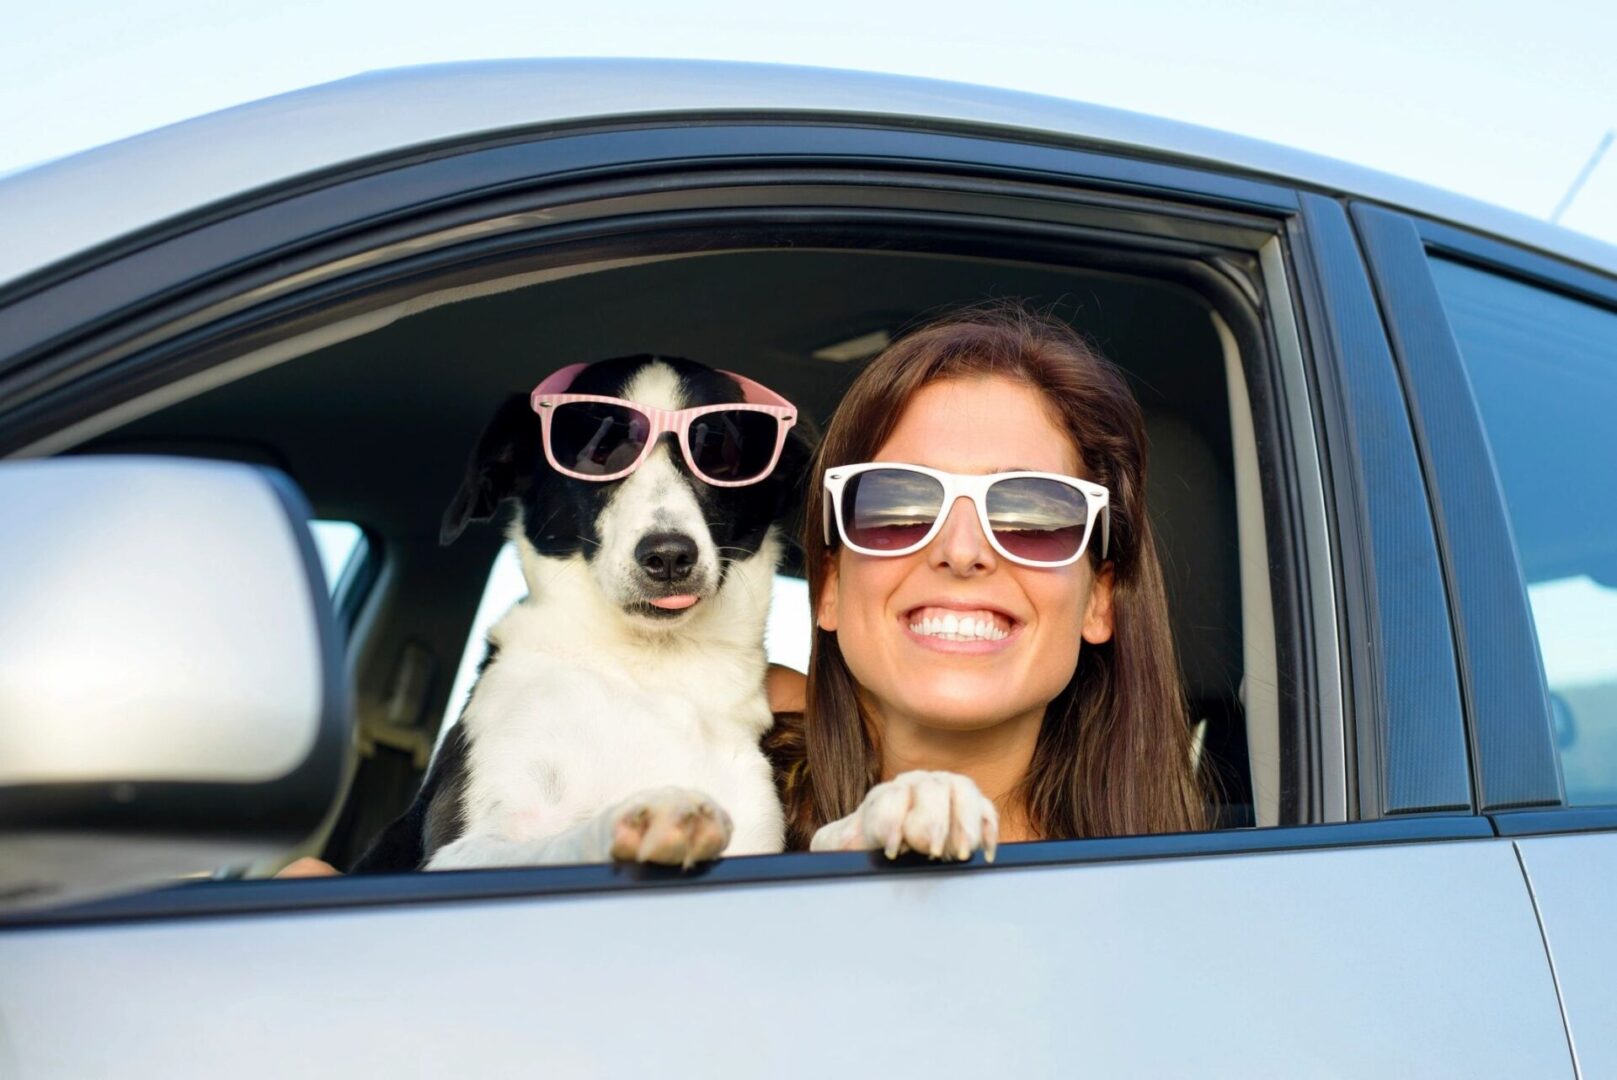 Lady and dog wearing sunglasses